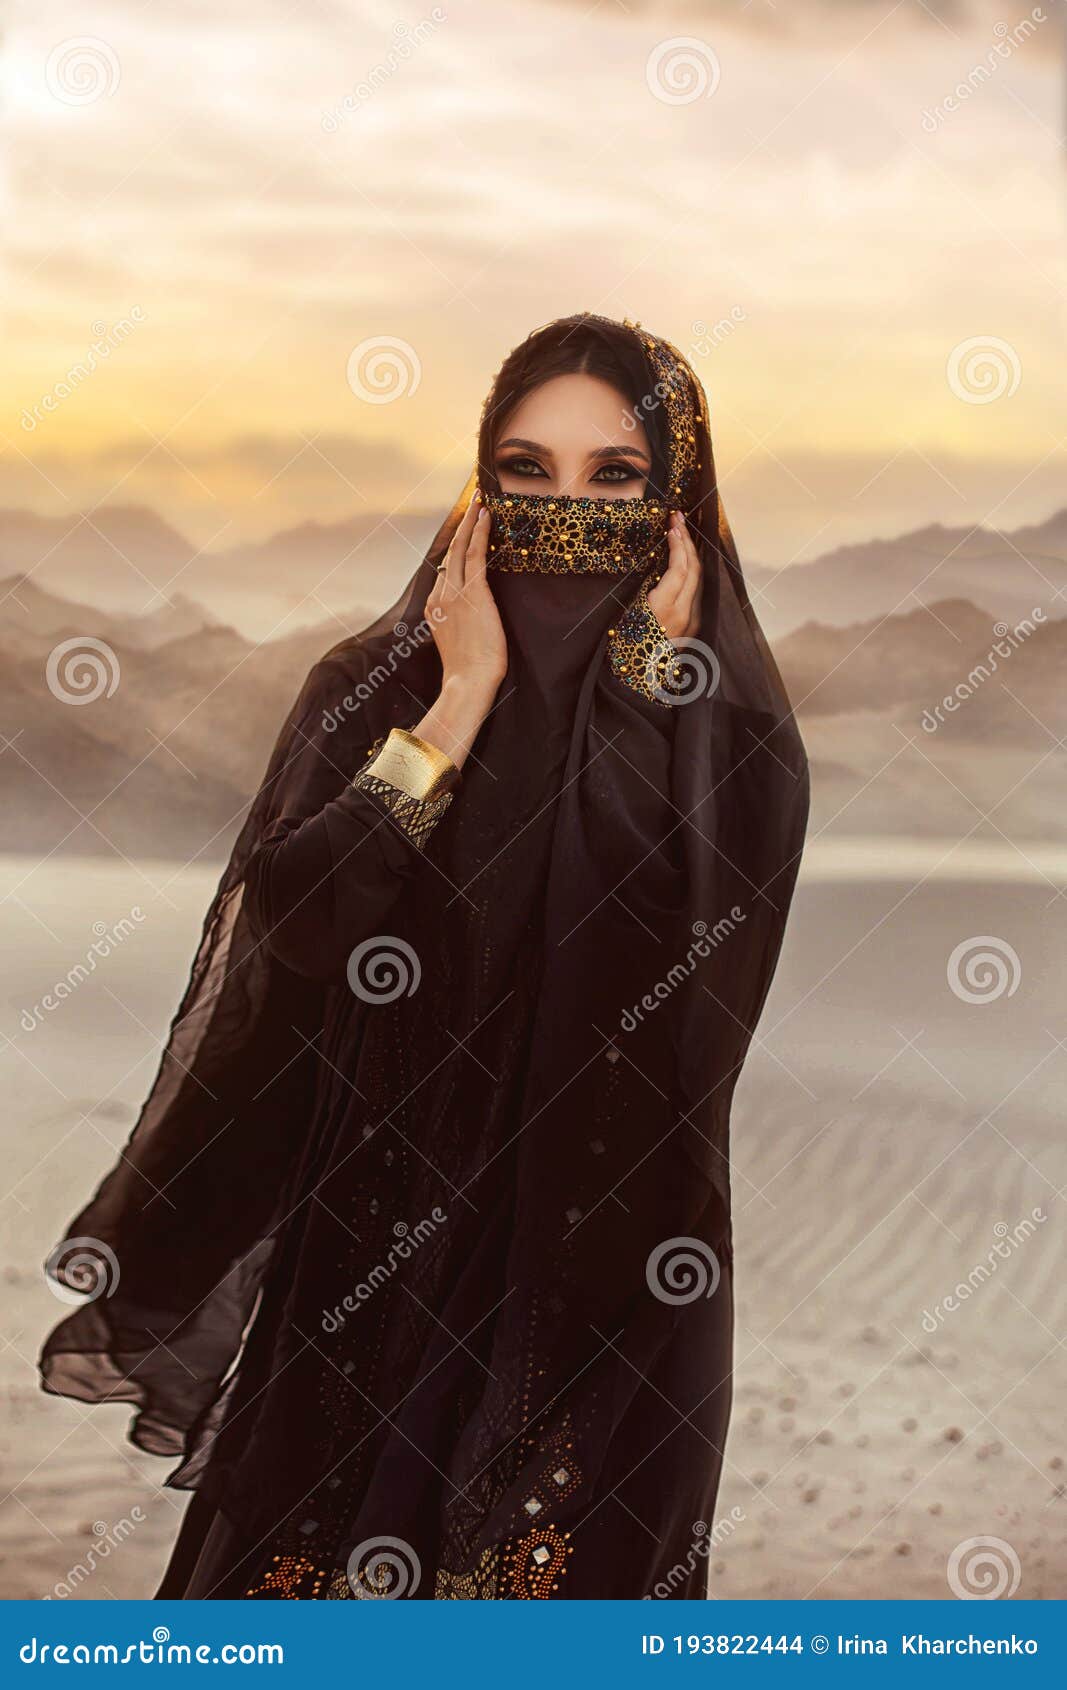 Ladies Gold Arabian Arab Headdress Head Cover Fancy Dress Costume Outfit Hat 